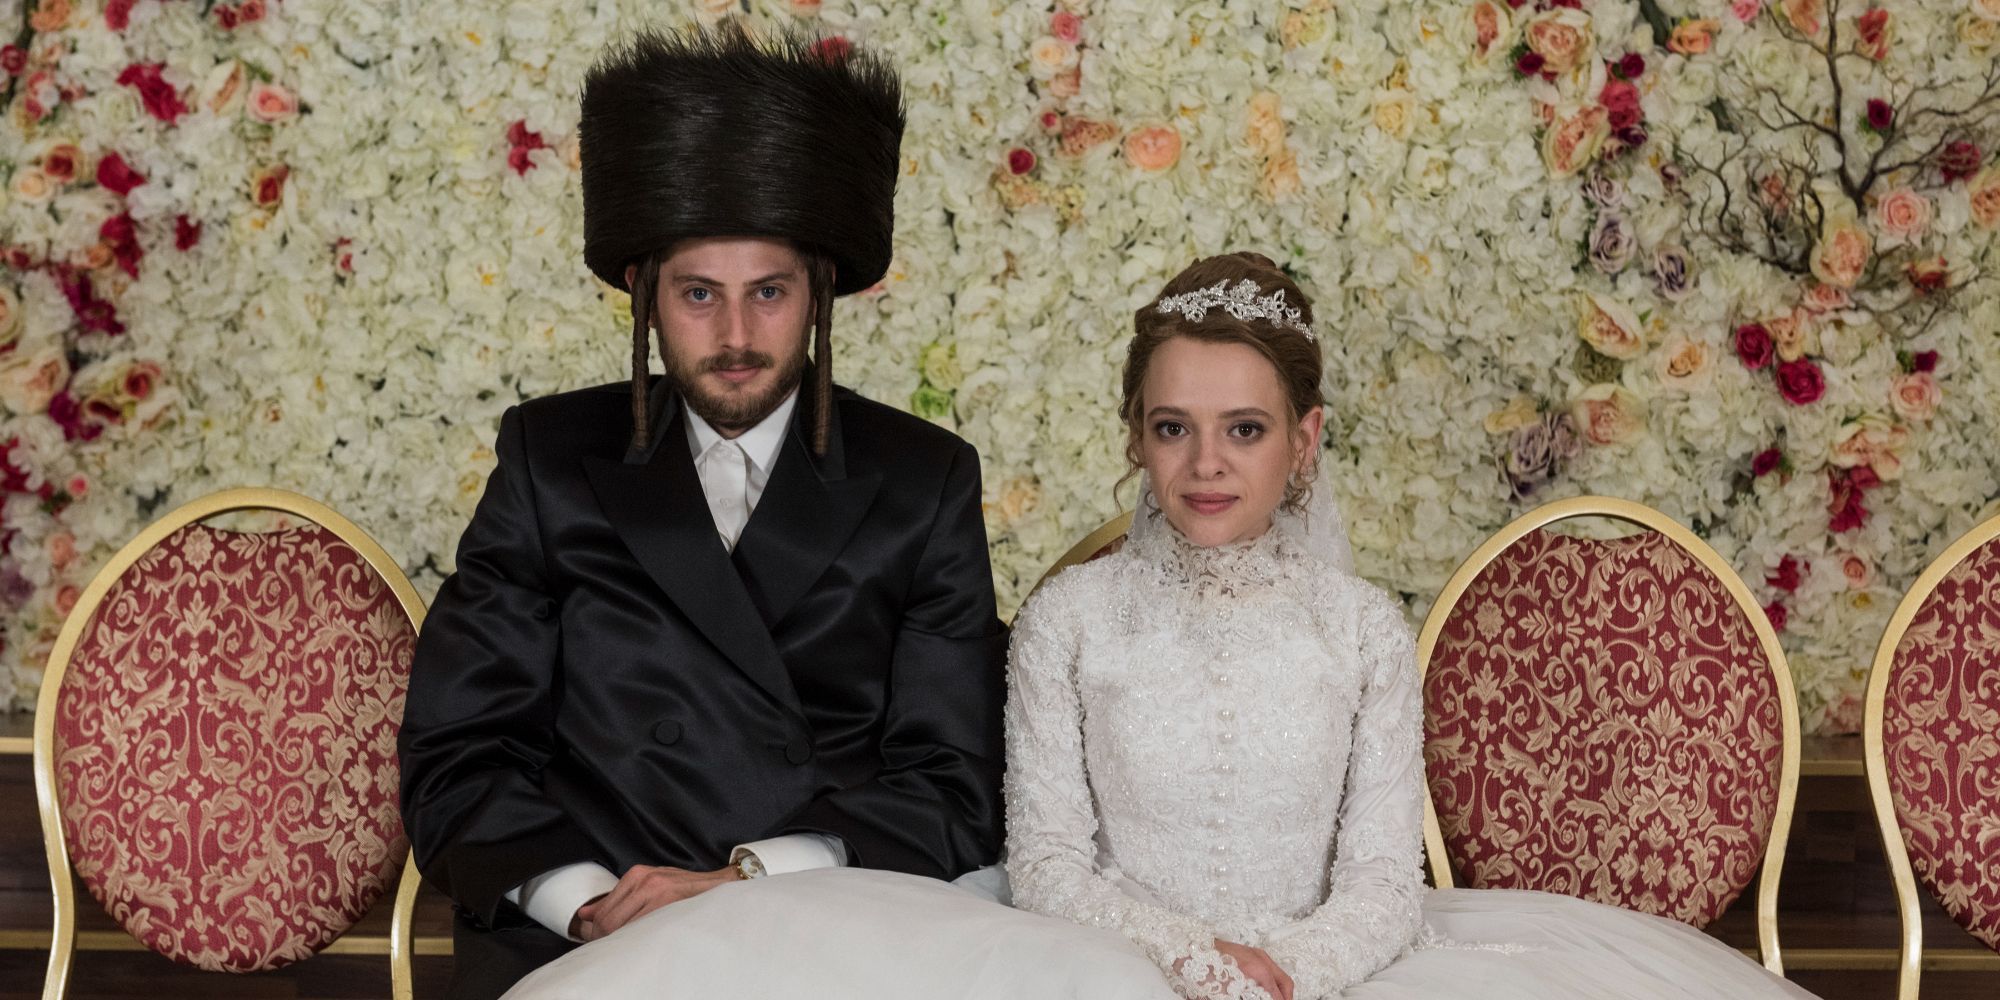 Bride and groom in a Jewish wedding